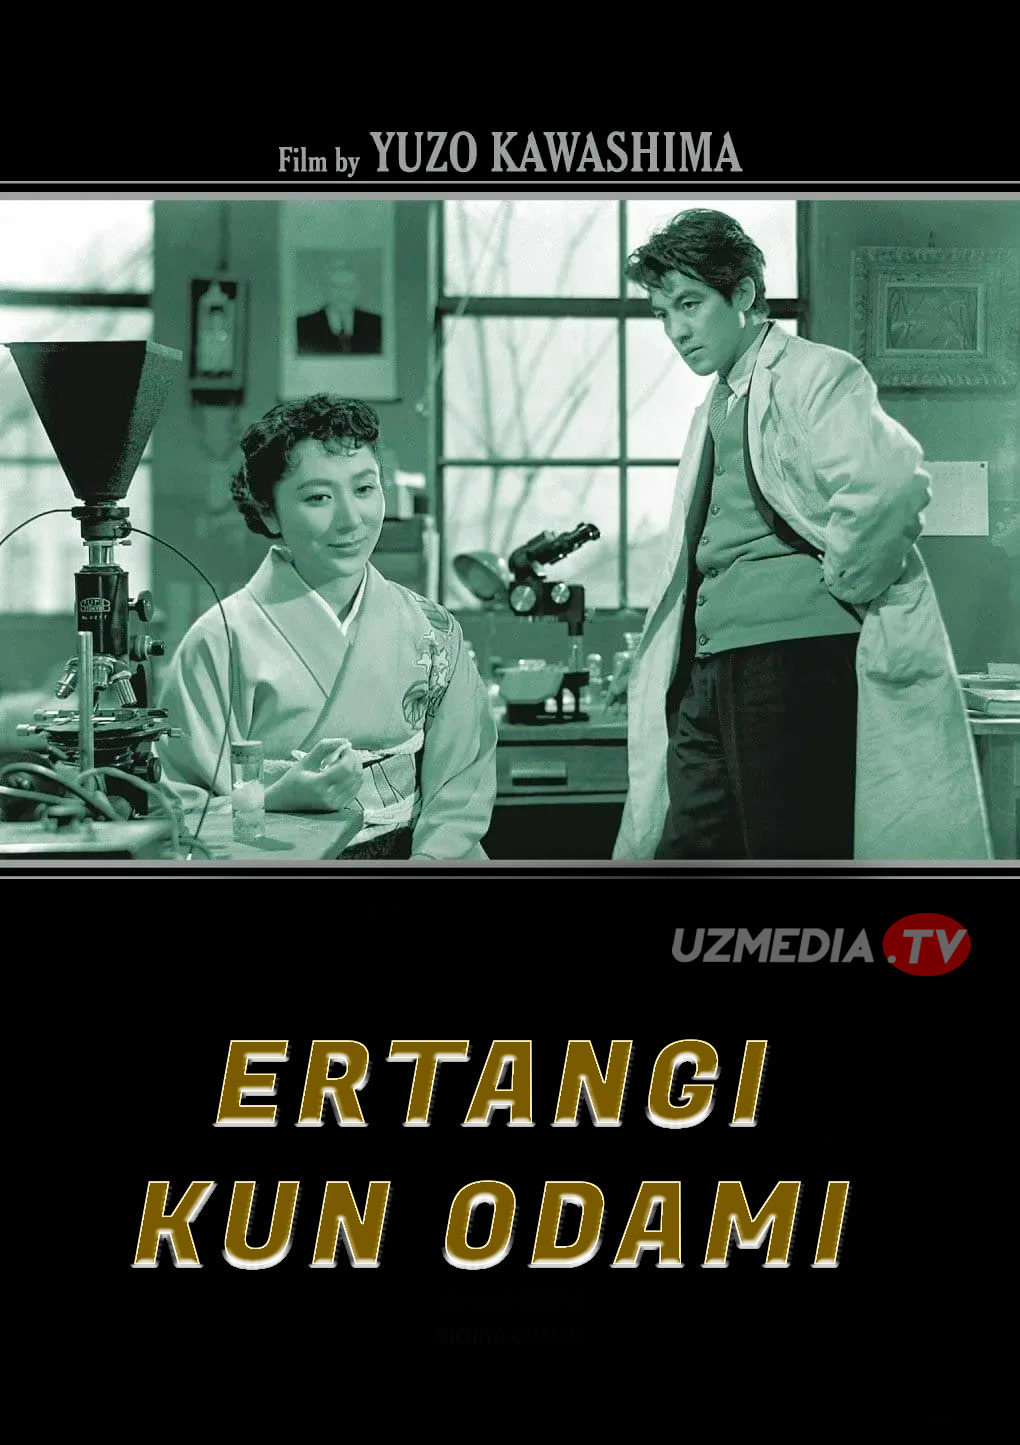 Ertangi kun odami Yaponiya retro filmi Uzbek tilida O'zbekcha 1955 tarjima kino SD skachat